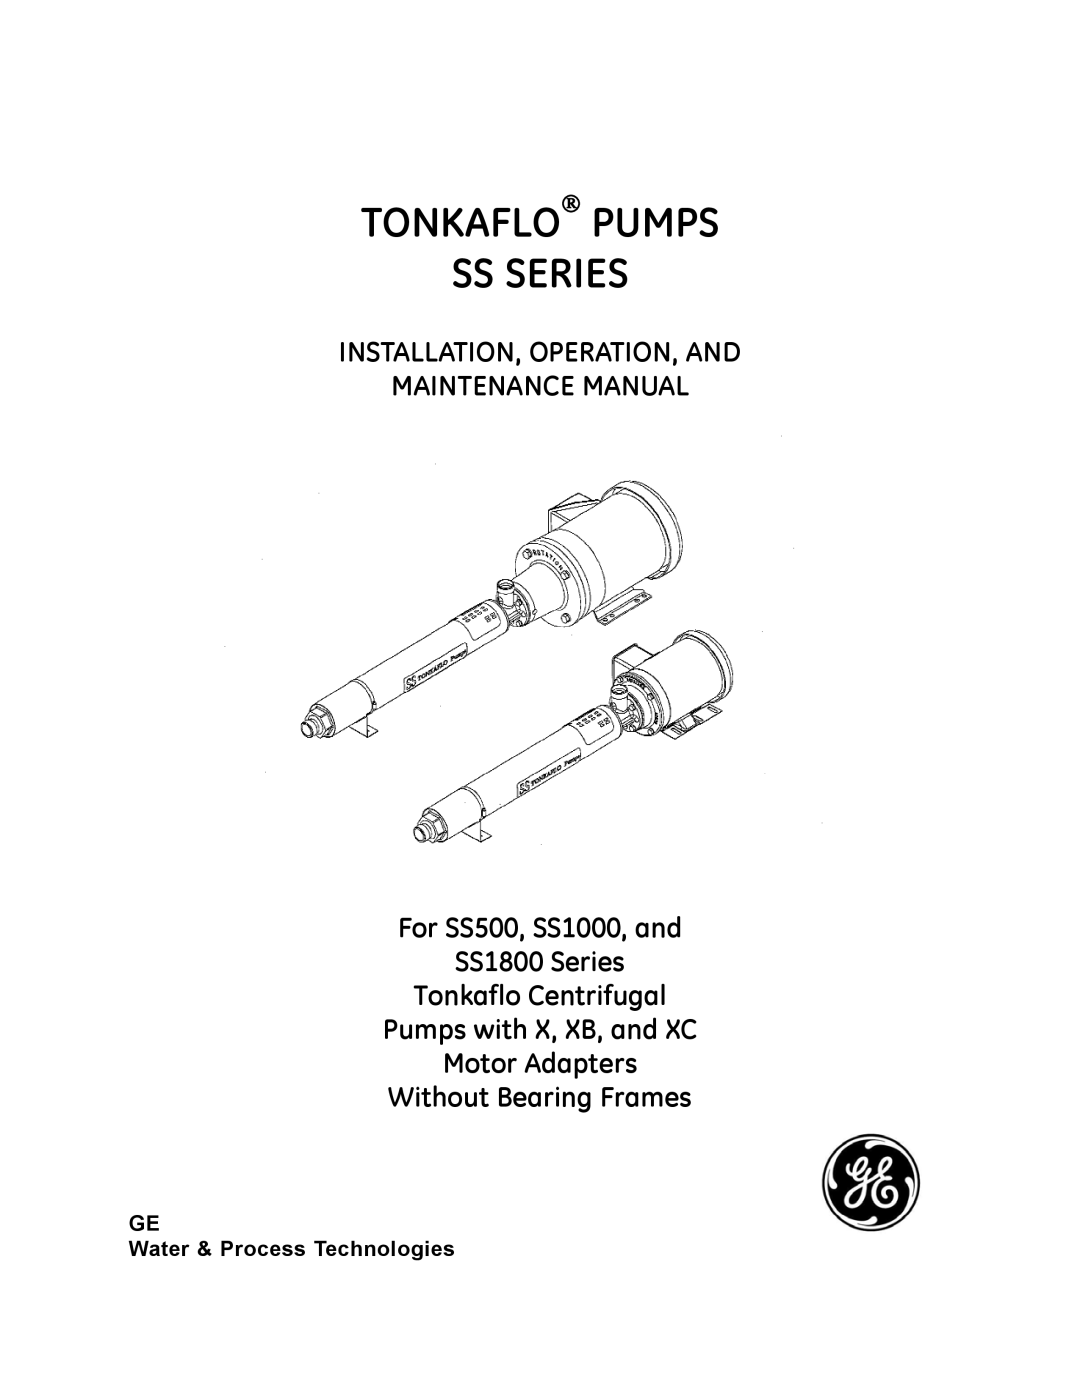 GE SS1800, SS1000, SS500 manual GE Infrastructure Water & Process Technologies, Osmonics Tonkaflo Pumps Ss Series 